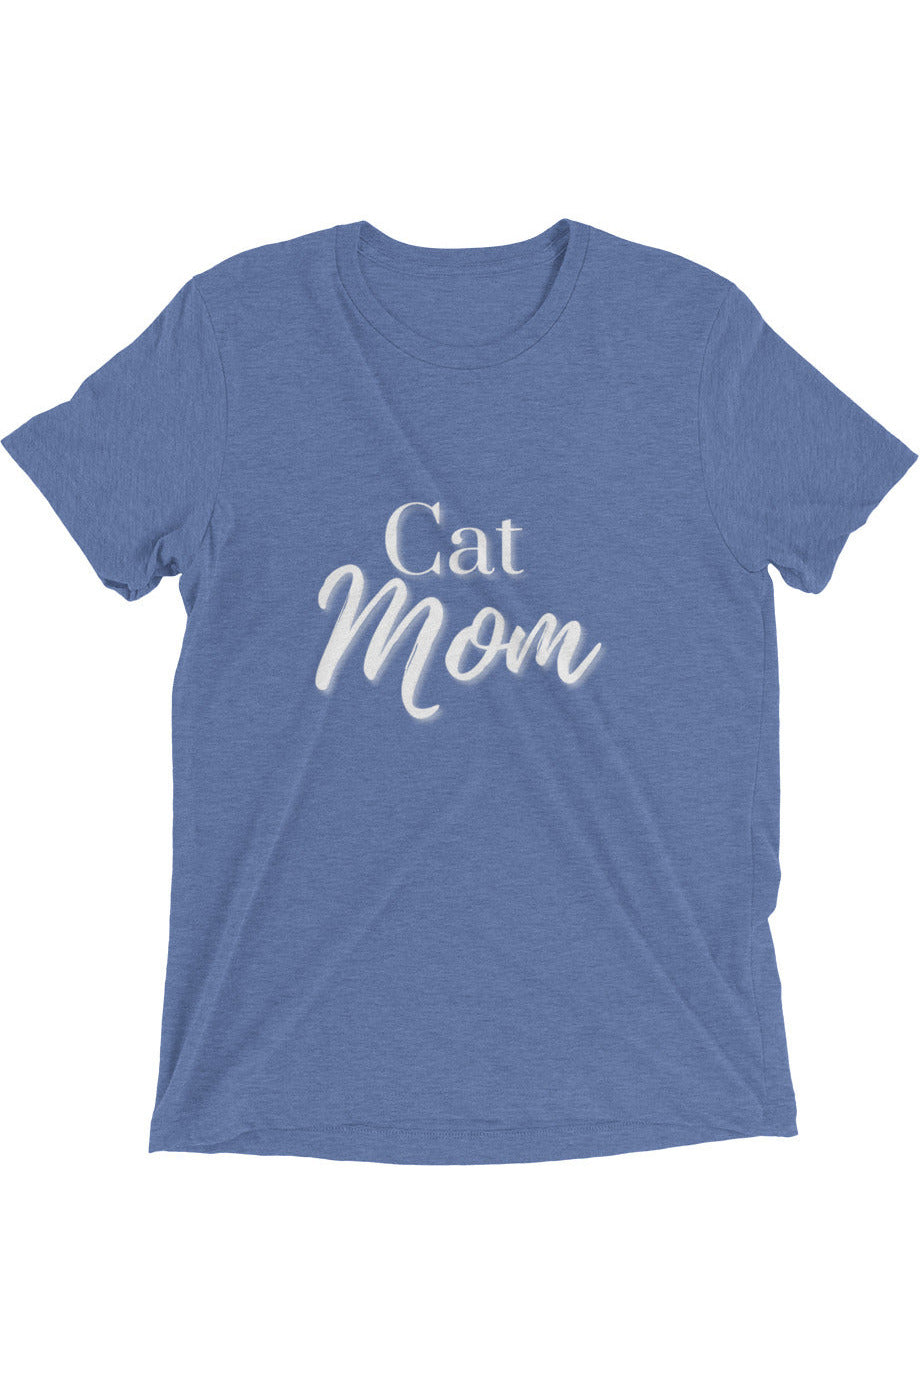 "Cat Mom" Short sleeve t-shirt